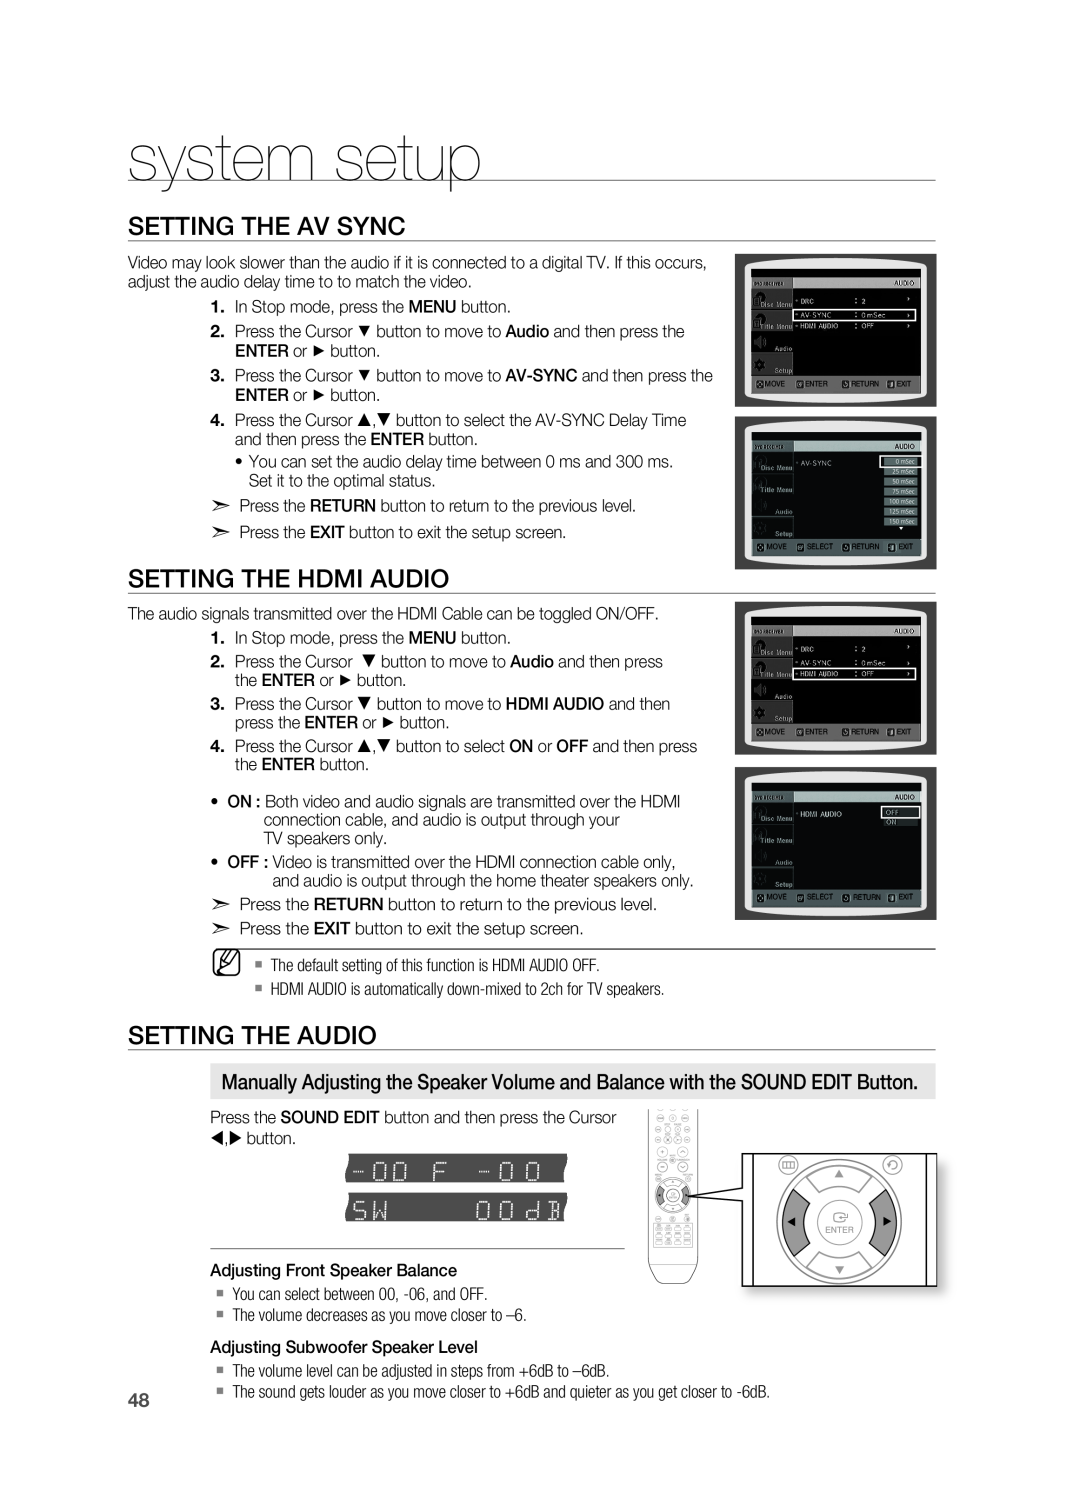 Sony HT-X810 user manual Setting The Av Sync, Setting The Hdmi Audio, Setting The Audio, system setup 